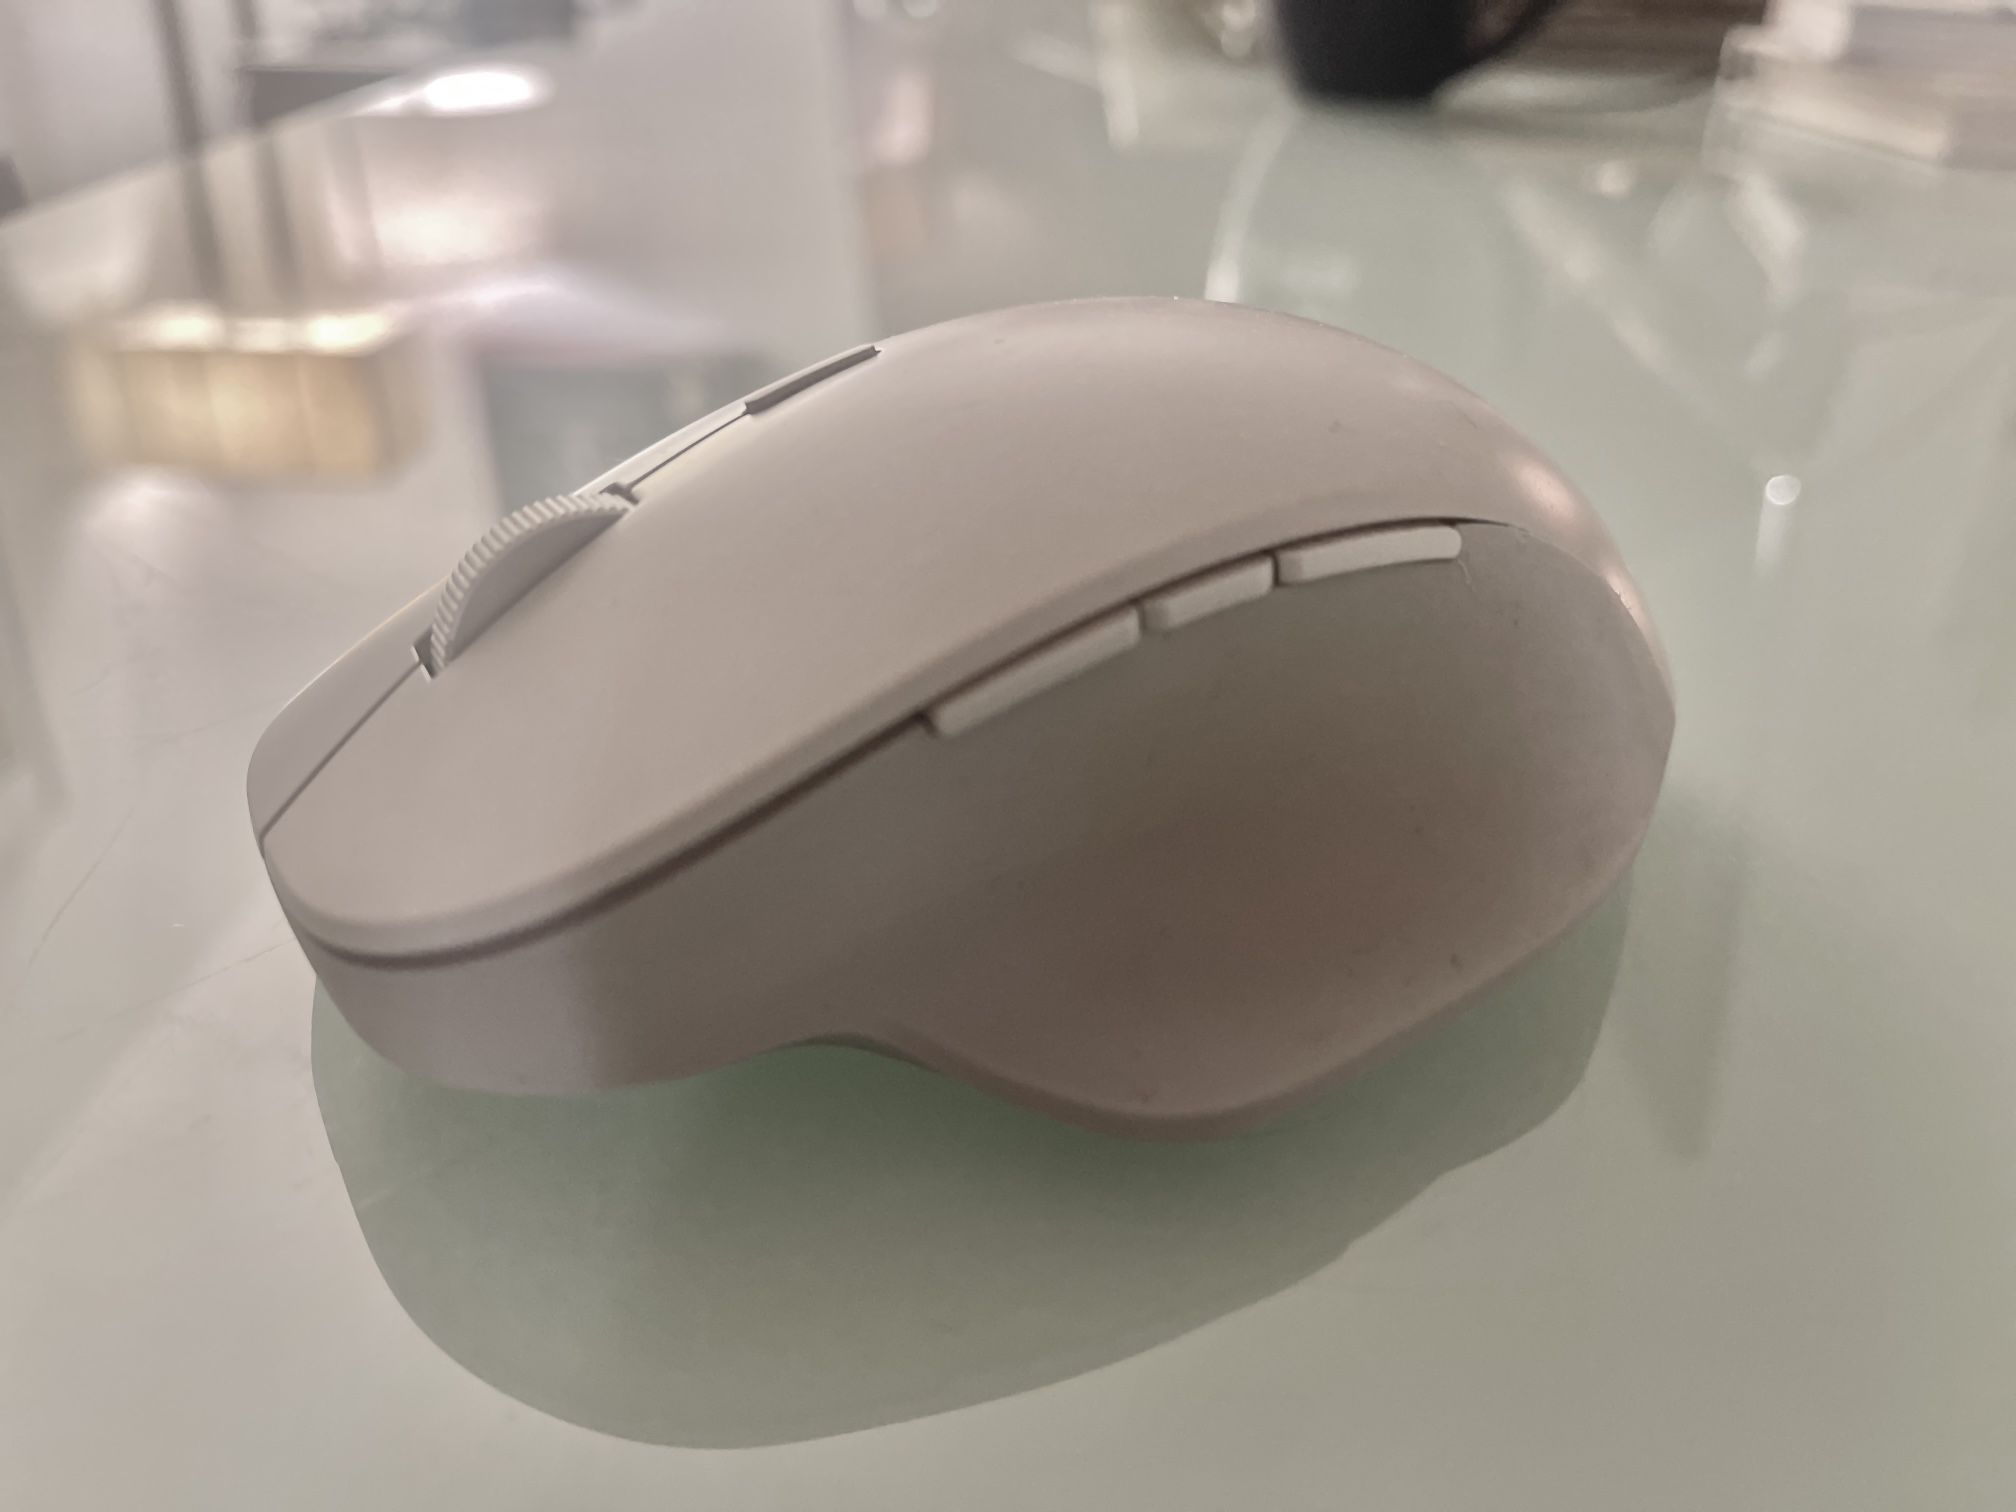 Microsoft Surface Precision Mouse Pro